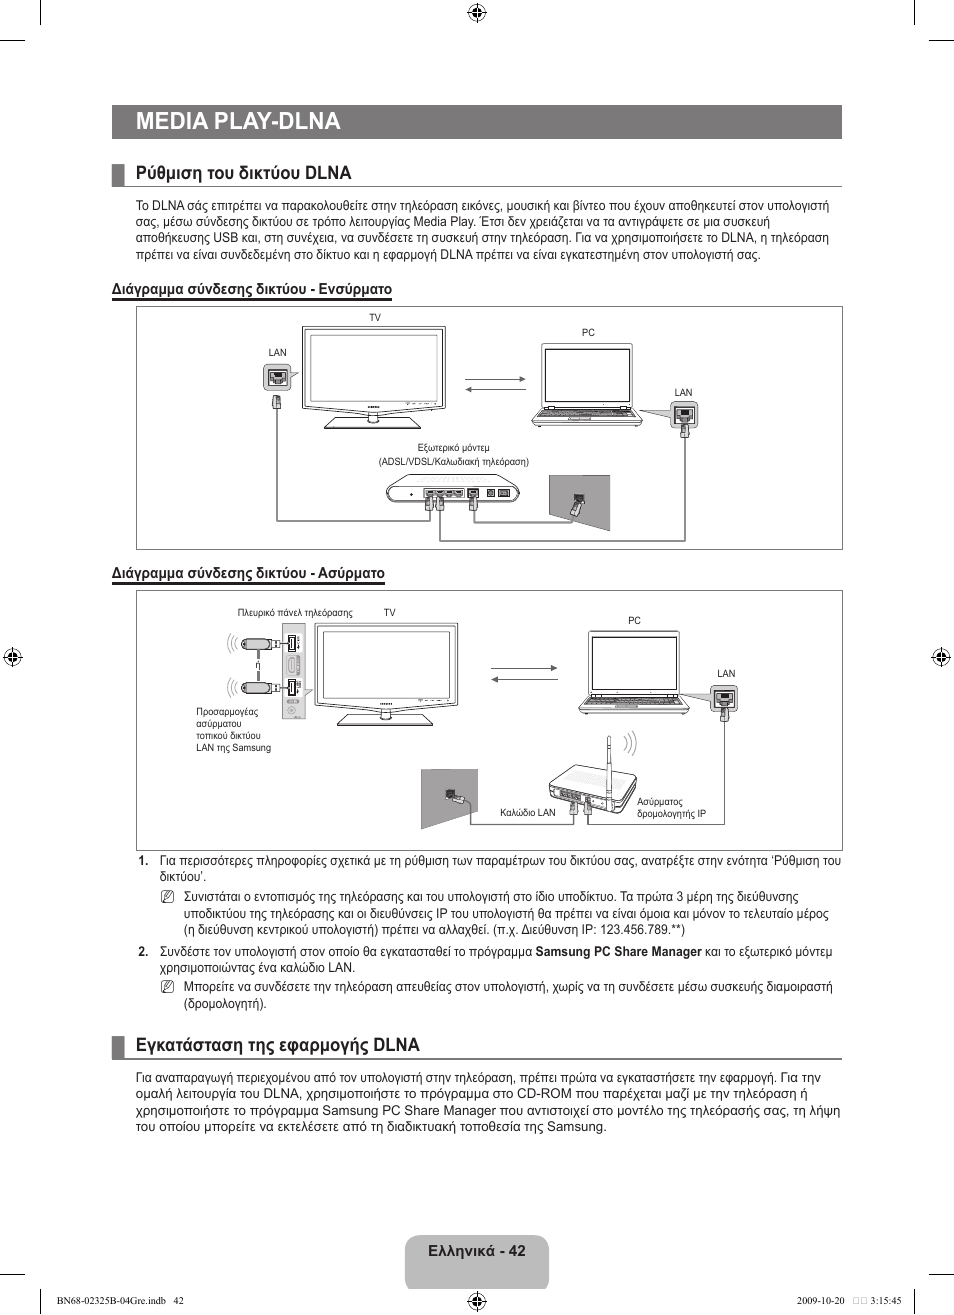 Media play-dlna, Ρύθμιση του δικτύου dlna, Εγκατάσταση της εφαρμογής dlna | Samsung LE37B650T2W User Manual | Page 254 / 680